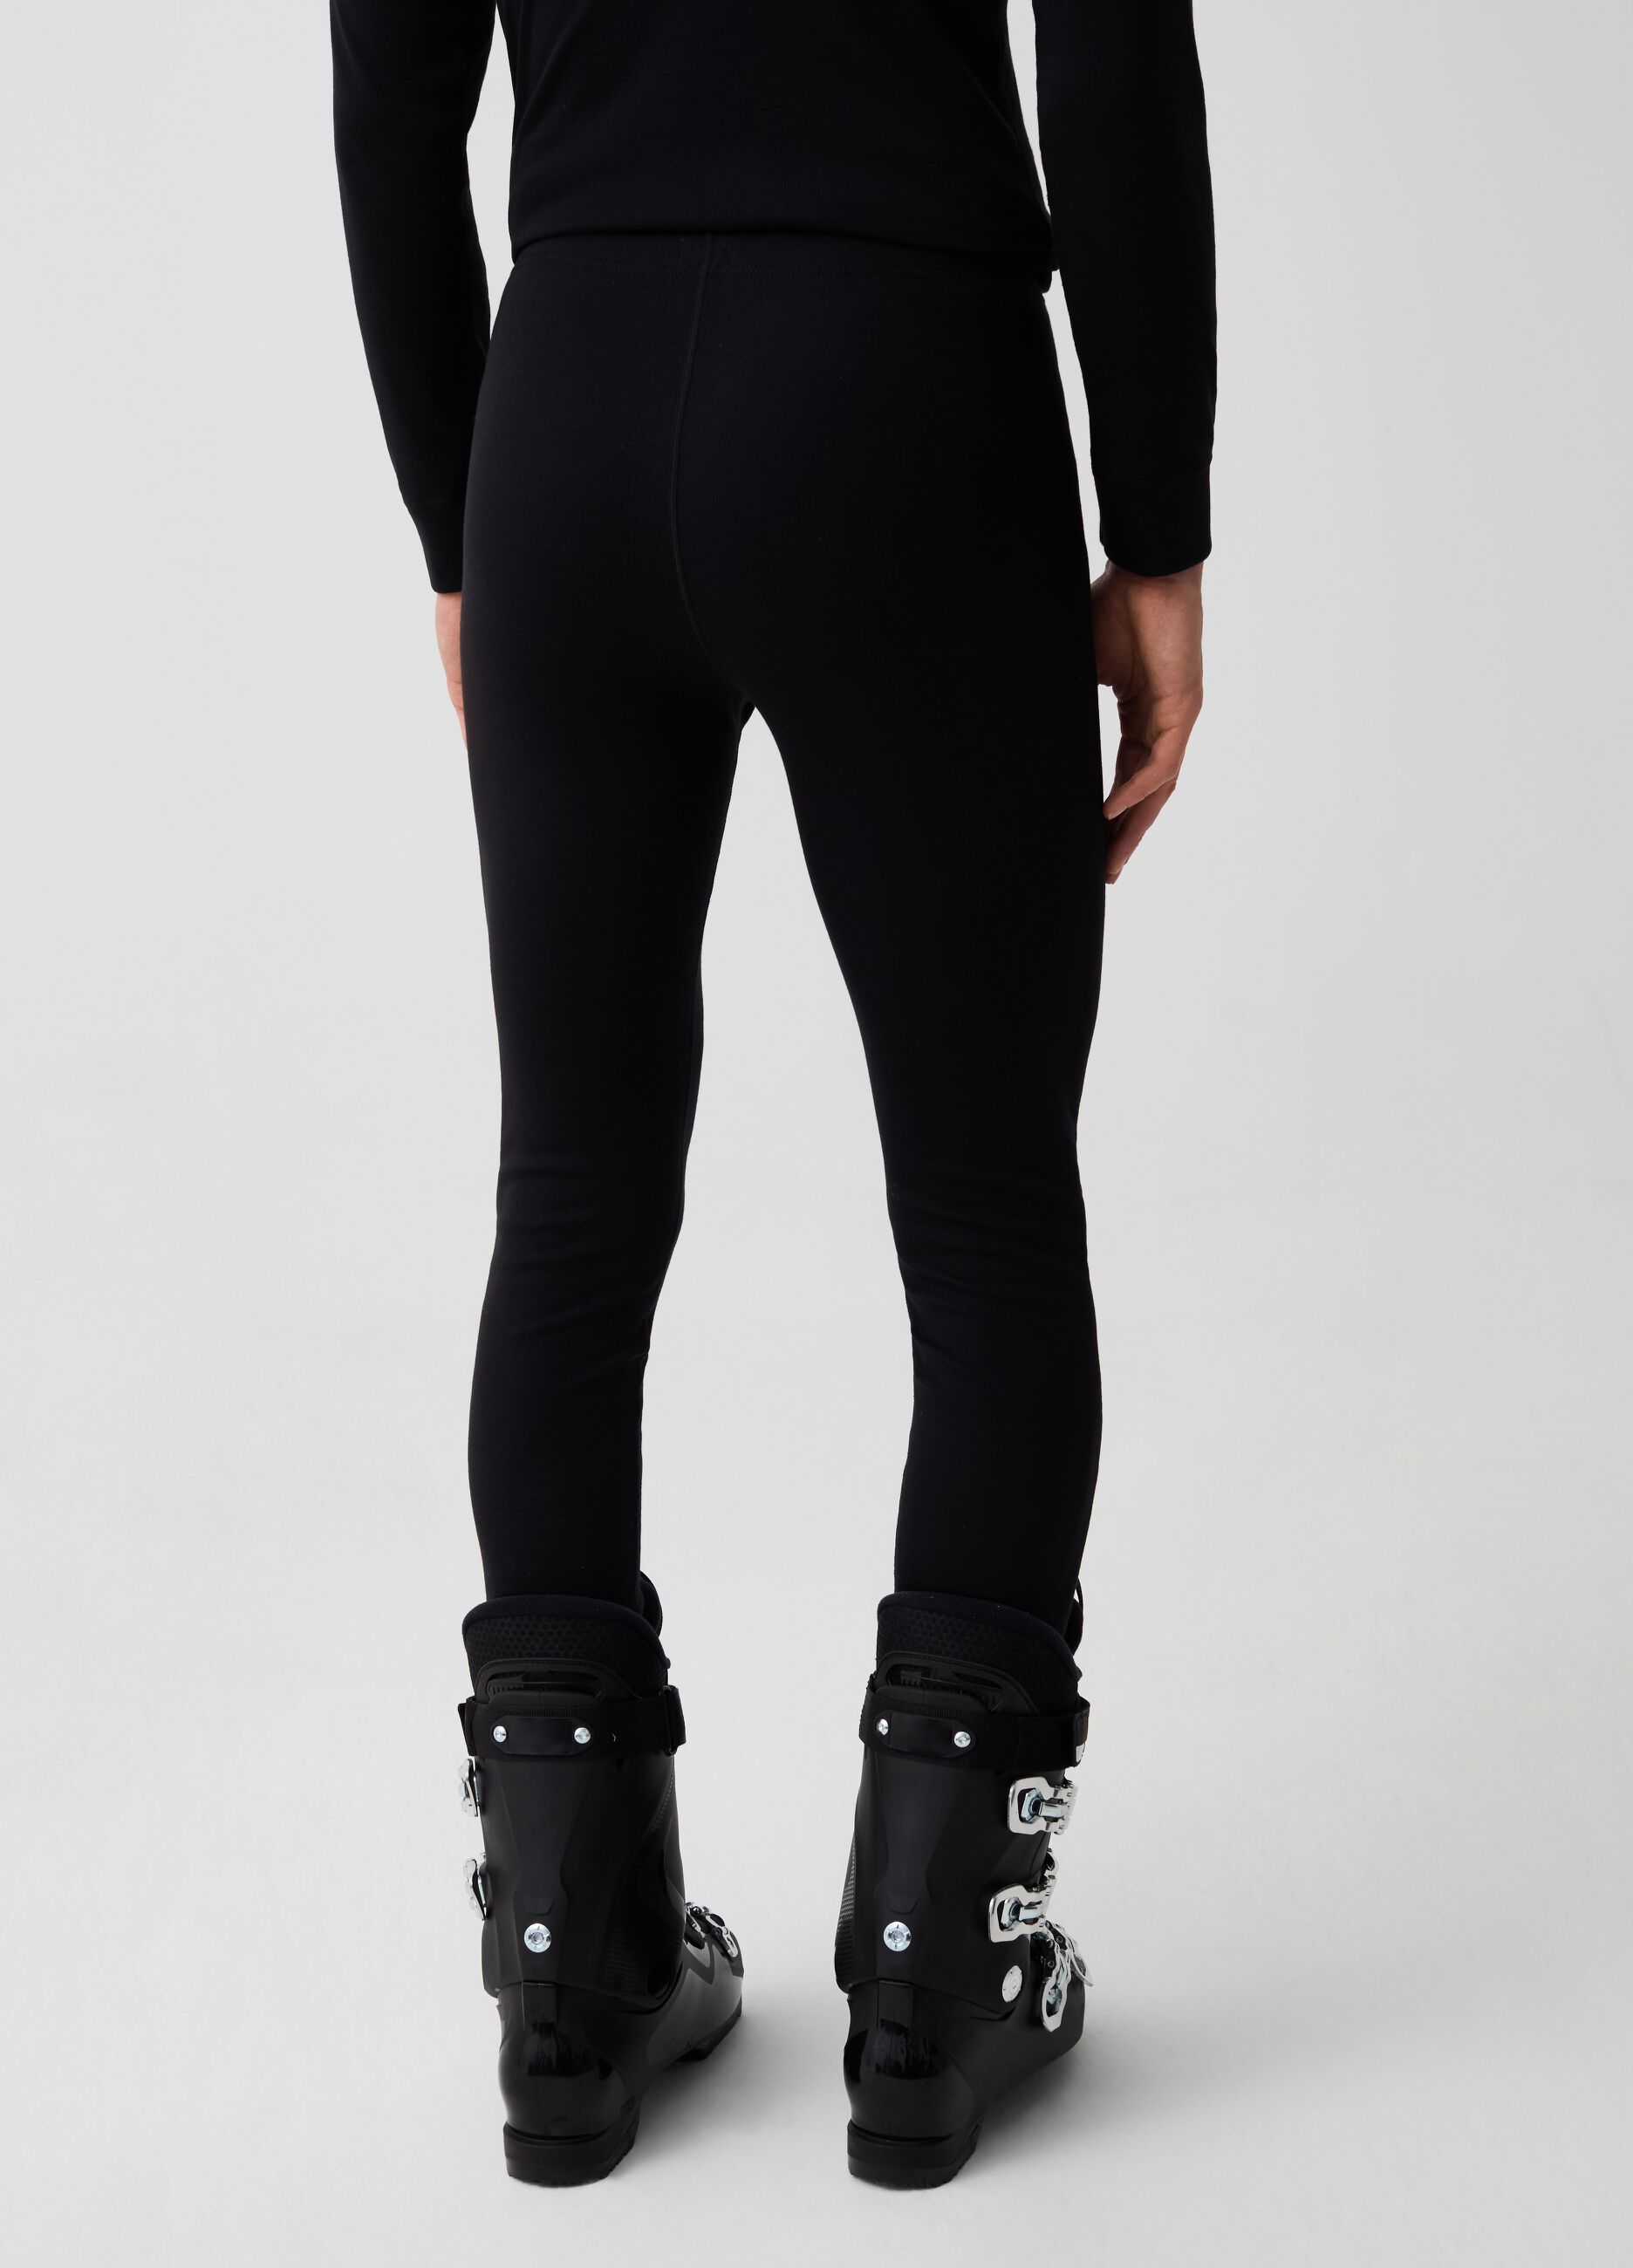 Spyder, Pants & Jumpsuits, Black Thermal Leggings Size Large